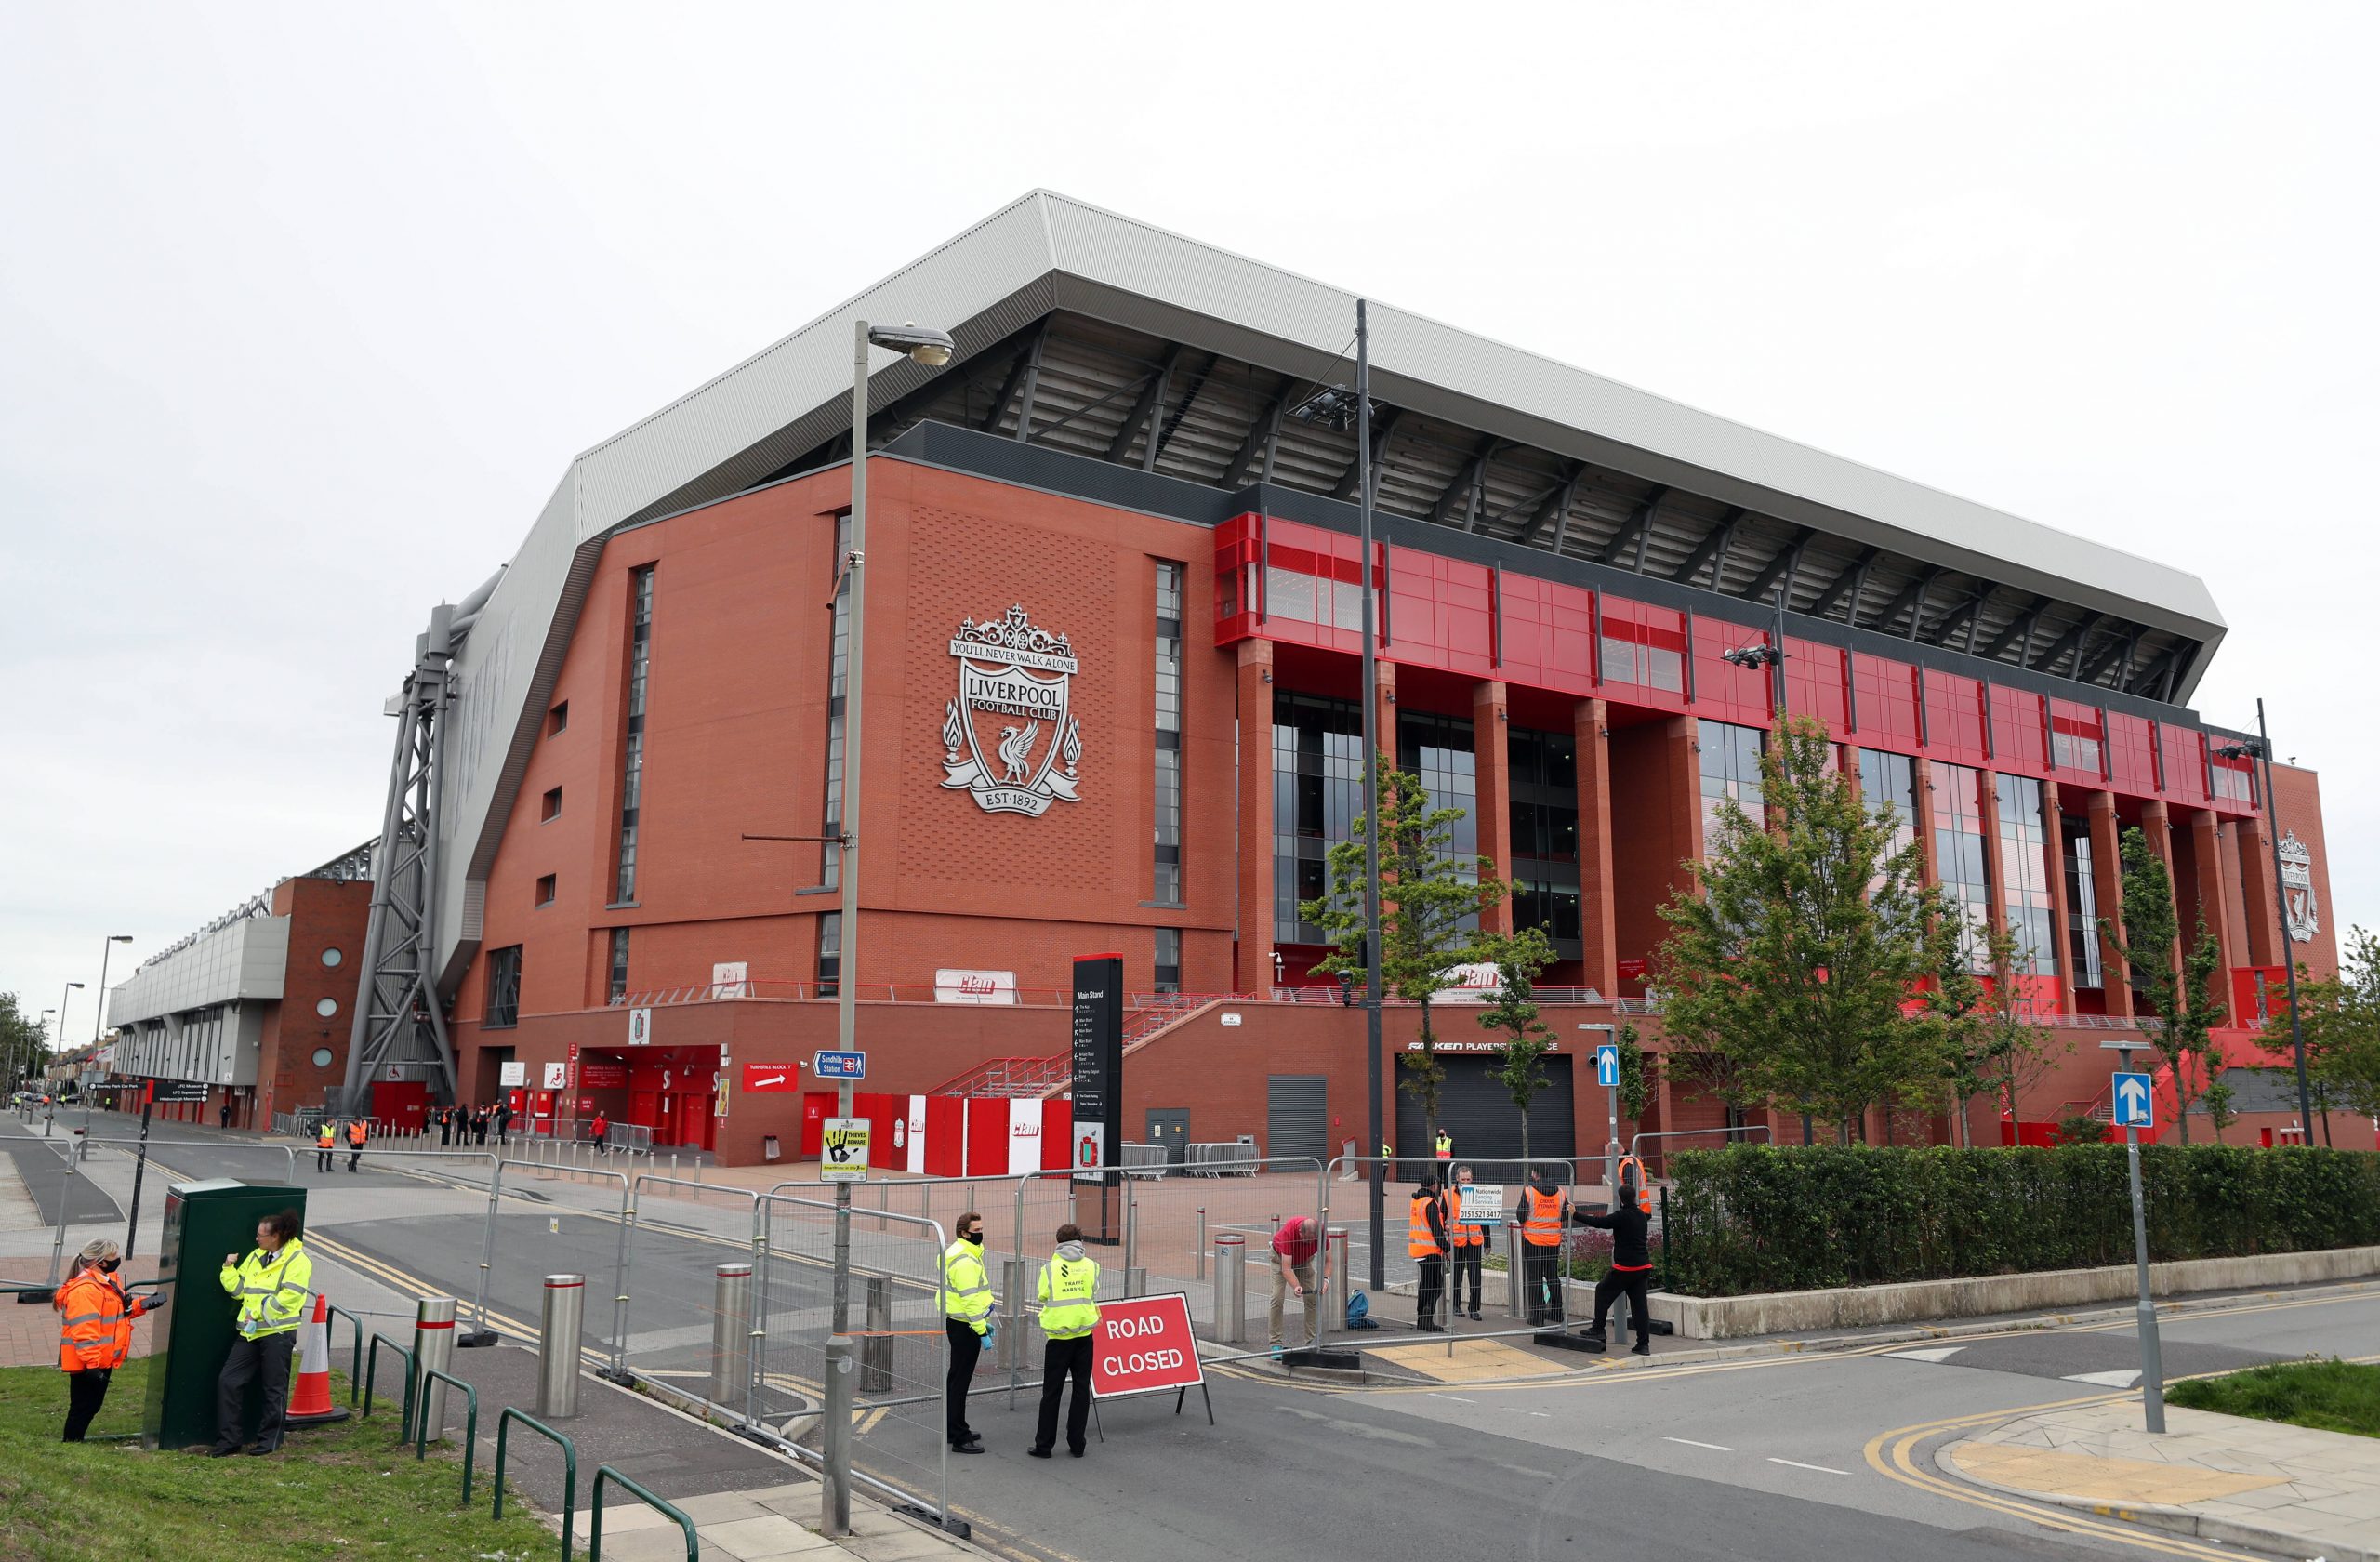 Anfield, stade de Liverpool